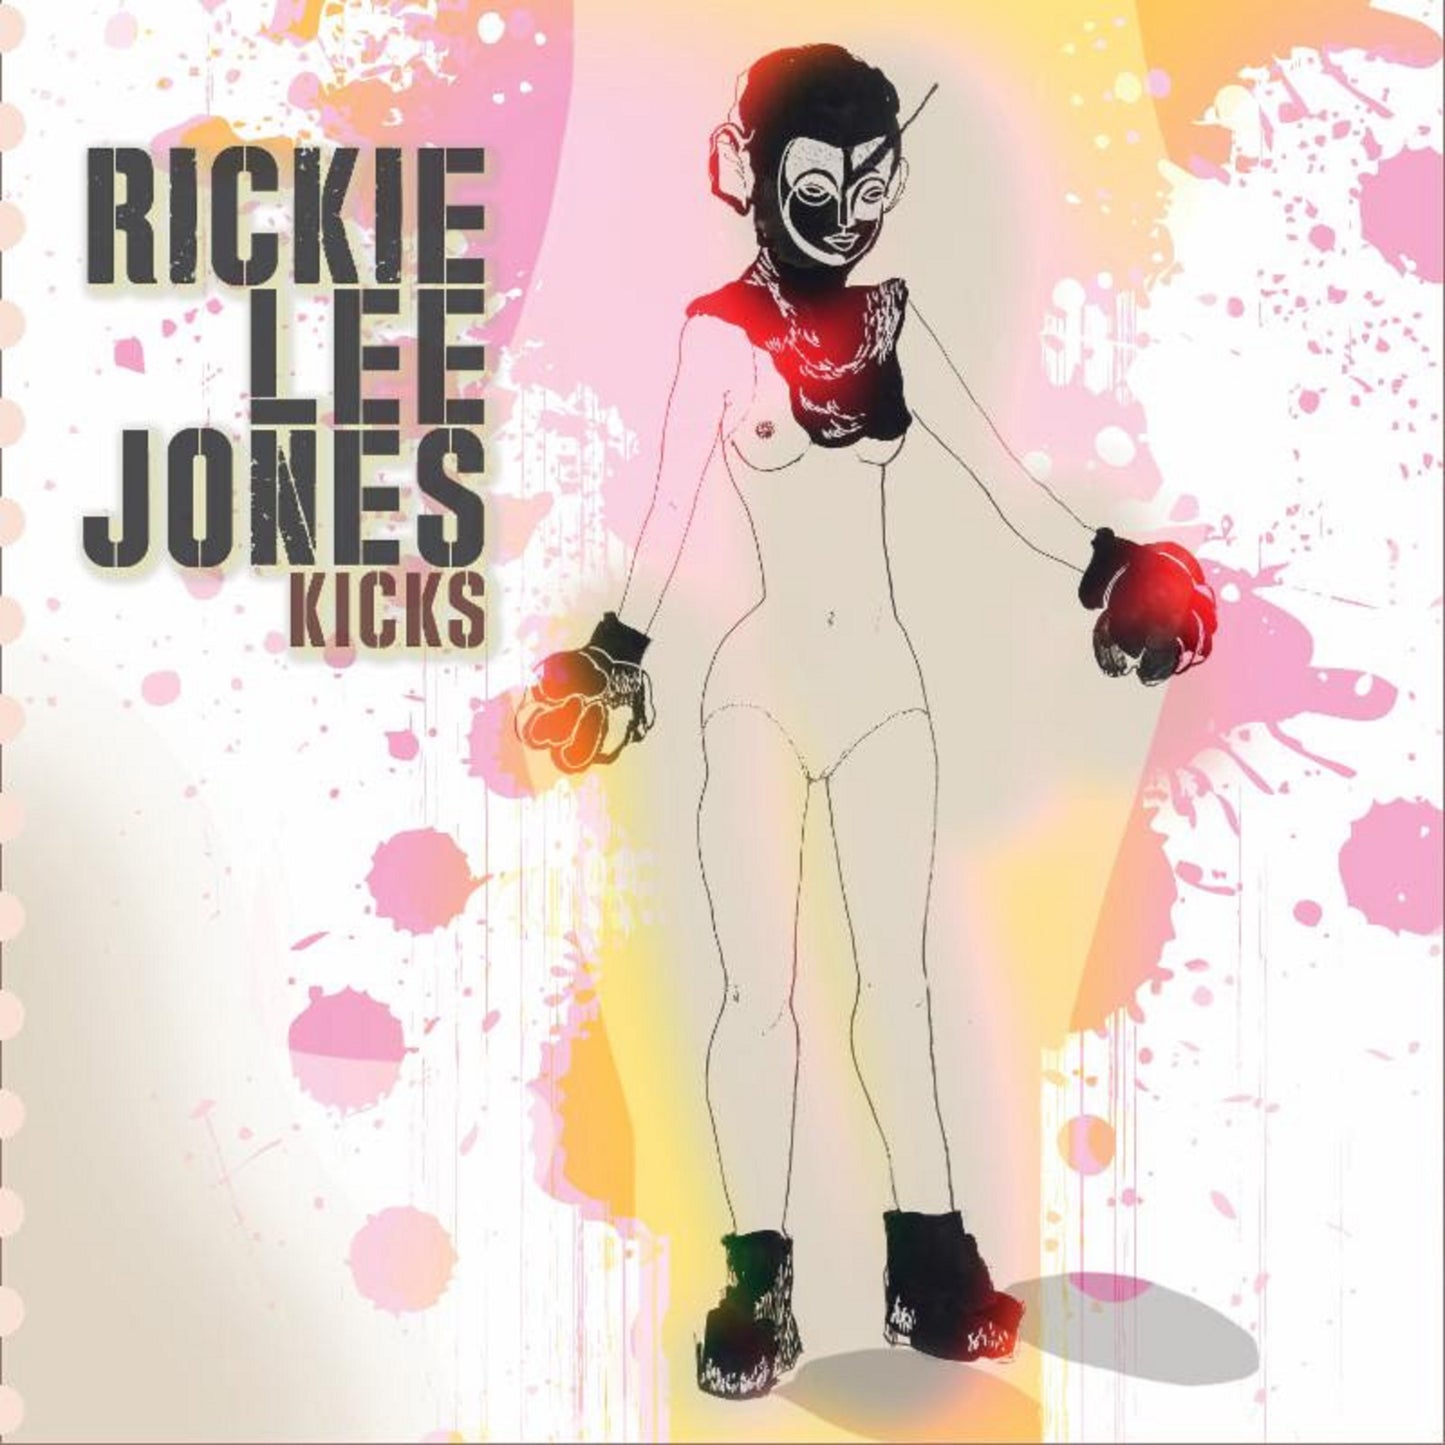 Jones, Rickie Lee - Kicks